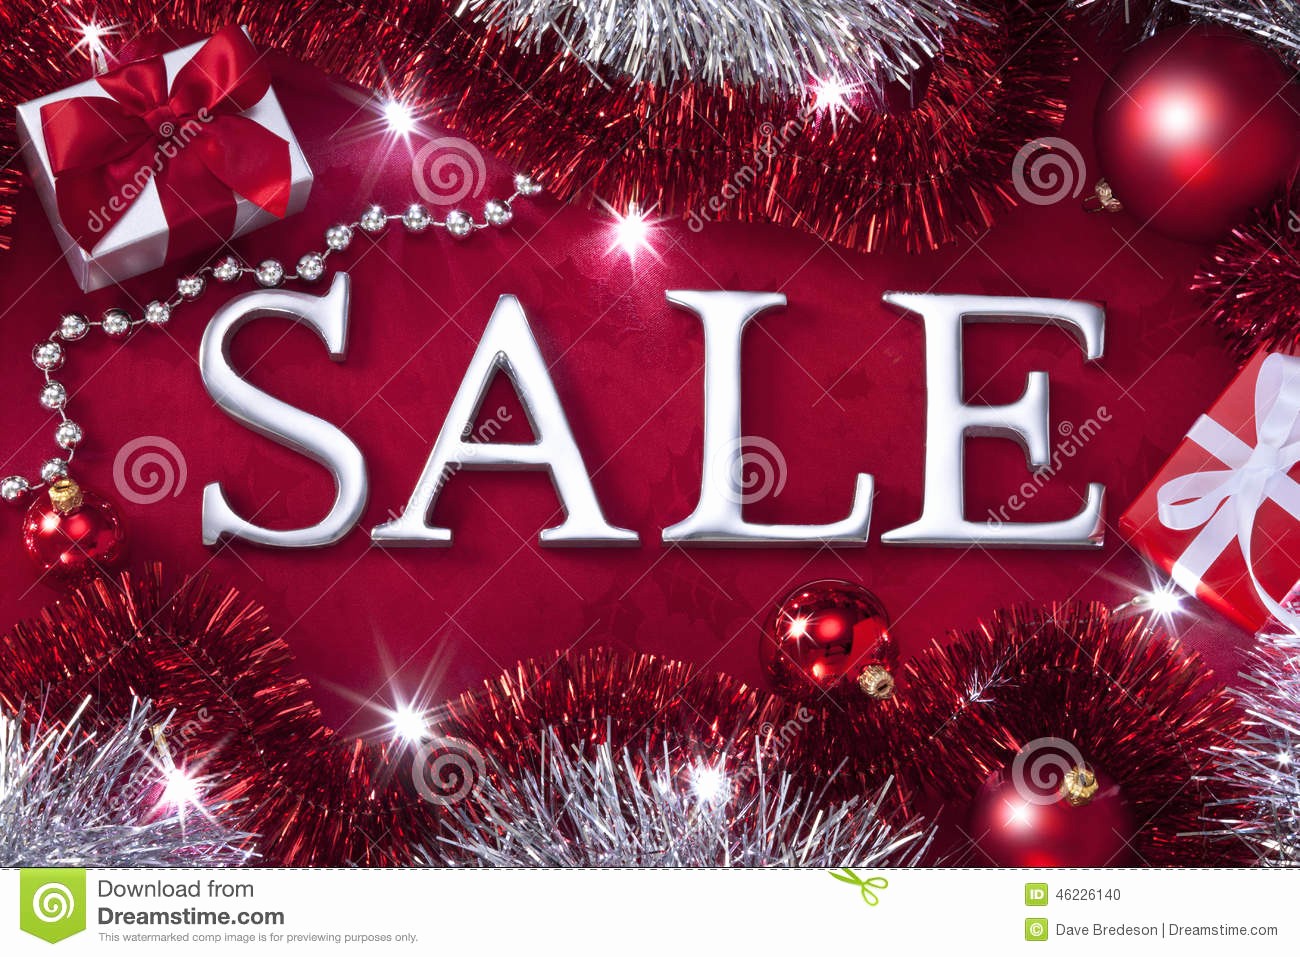 Christmas Background Images for Word Elegant Christmas Holiday Sale Background Stock Image